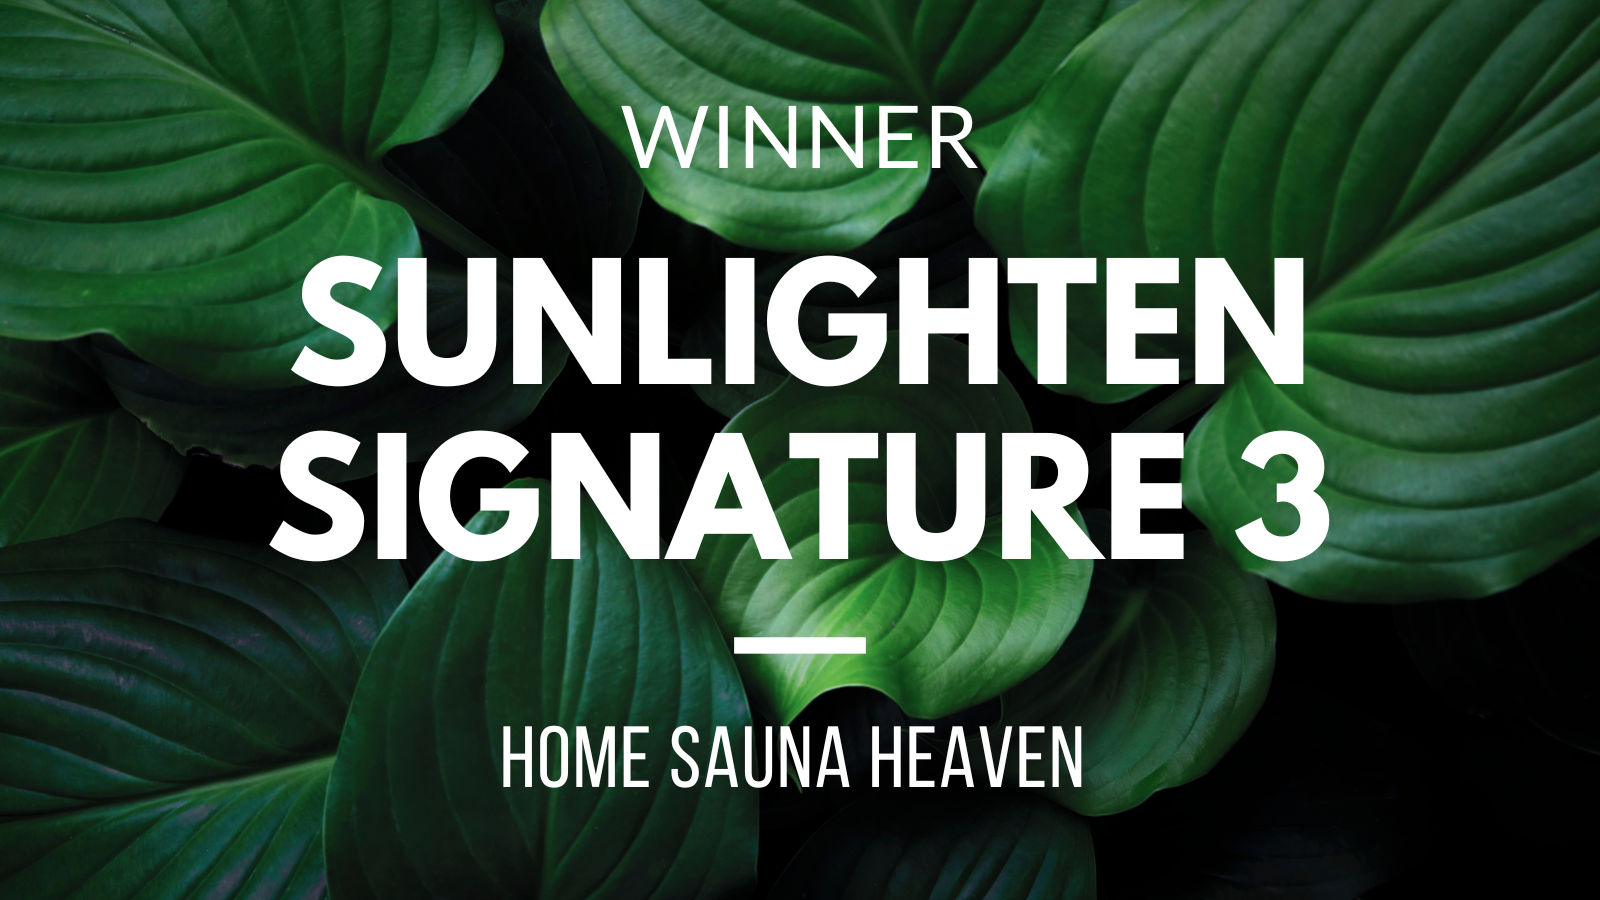 sunlighten signature 3 infrared sauna